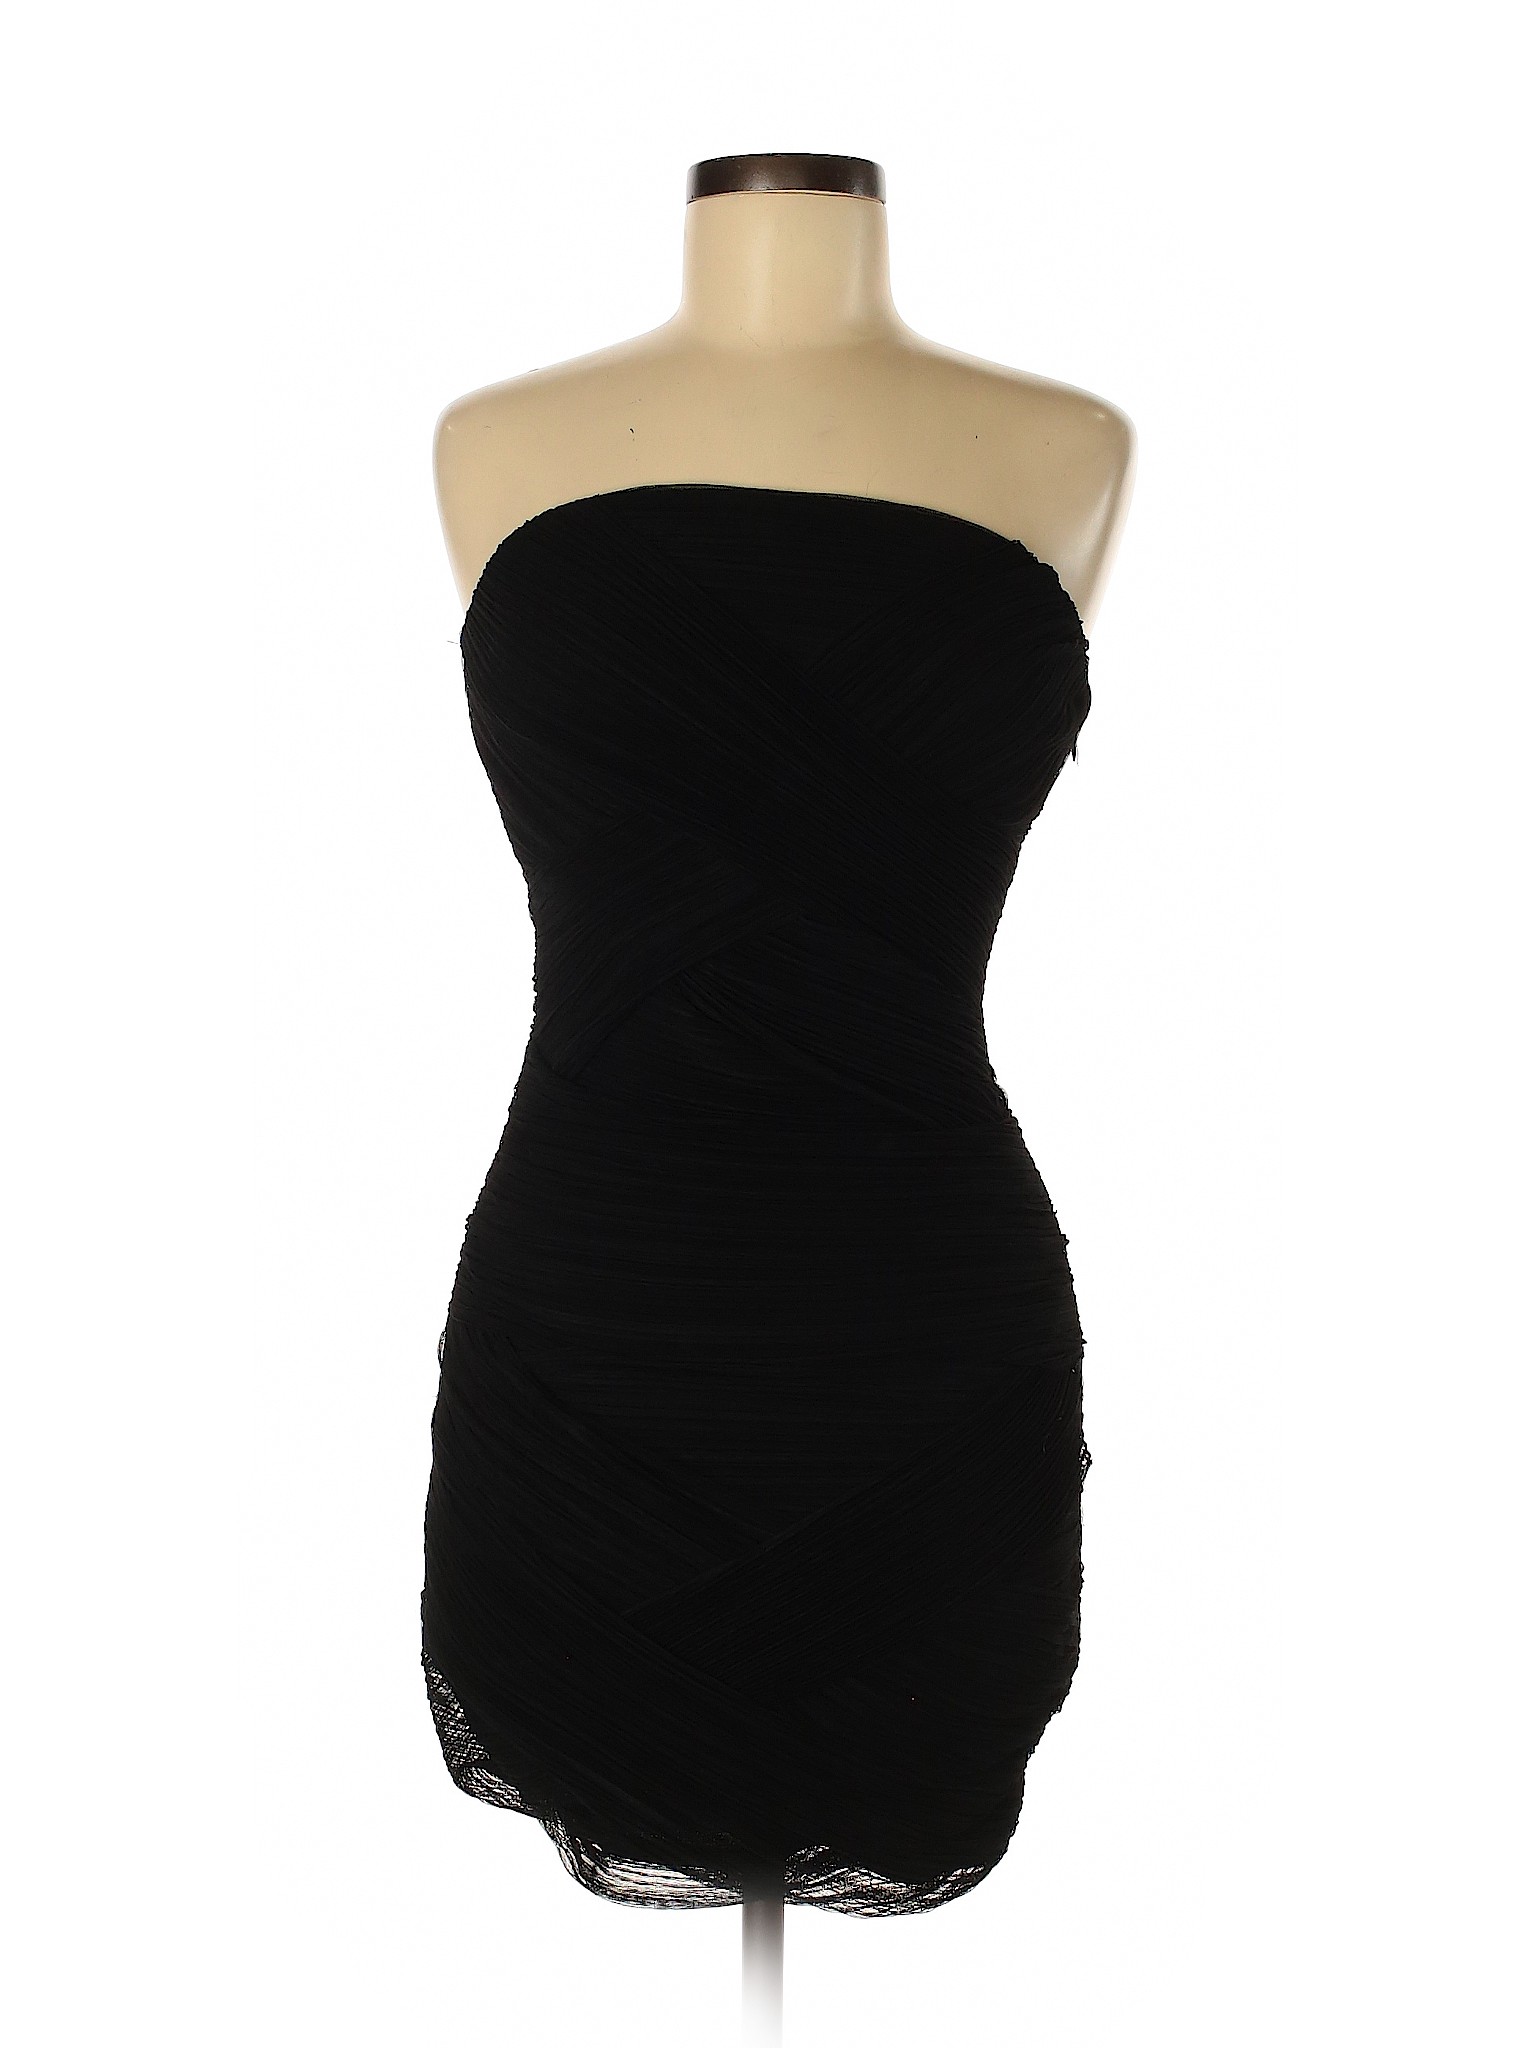 Pookie & Sebastian Women Black Cocktail Dress S | eBay